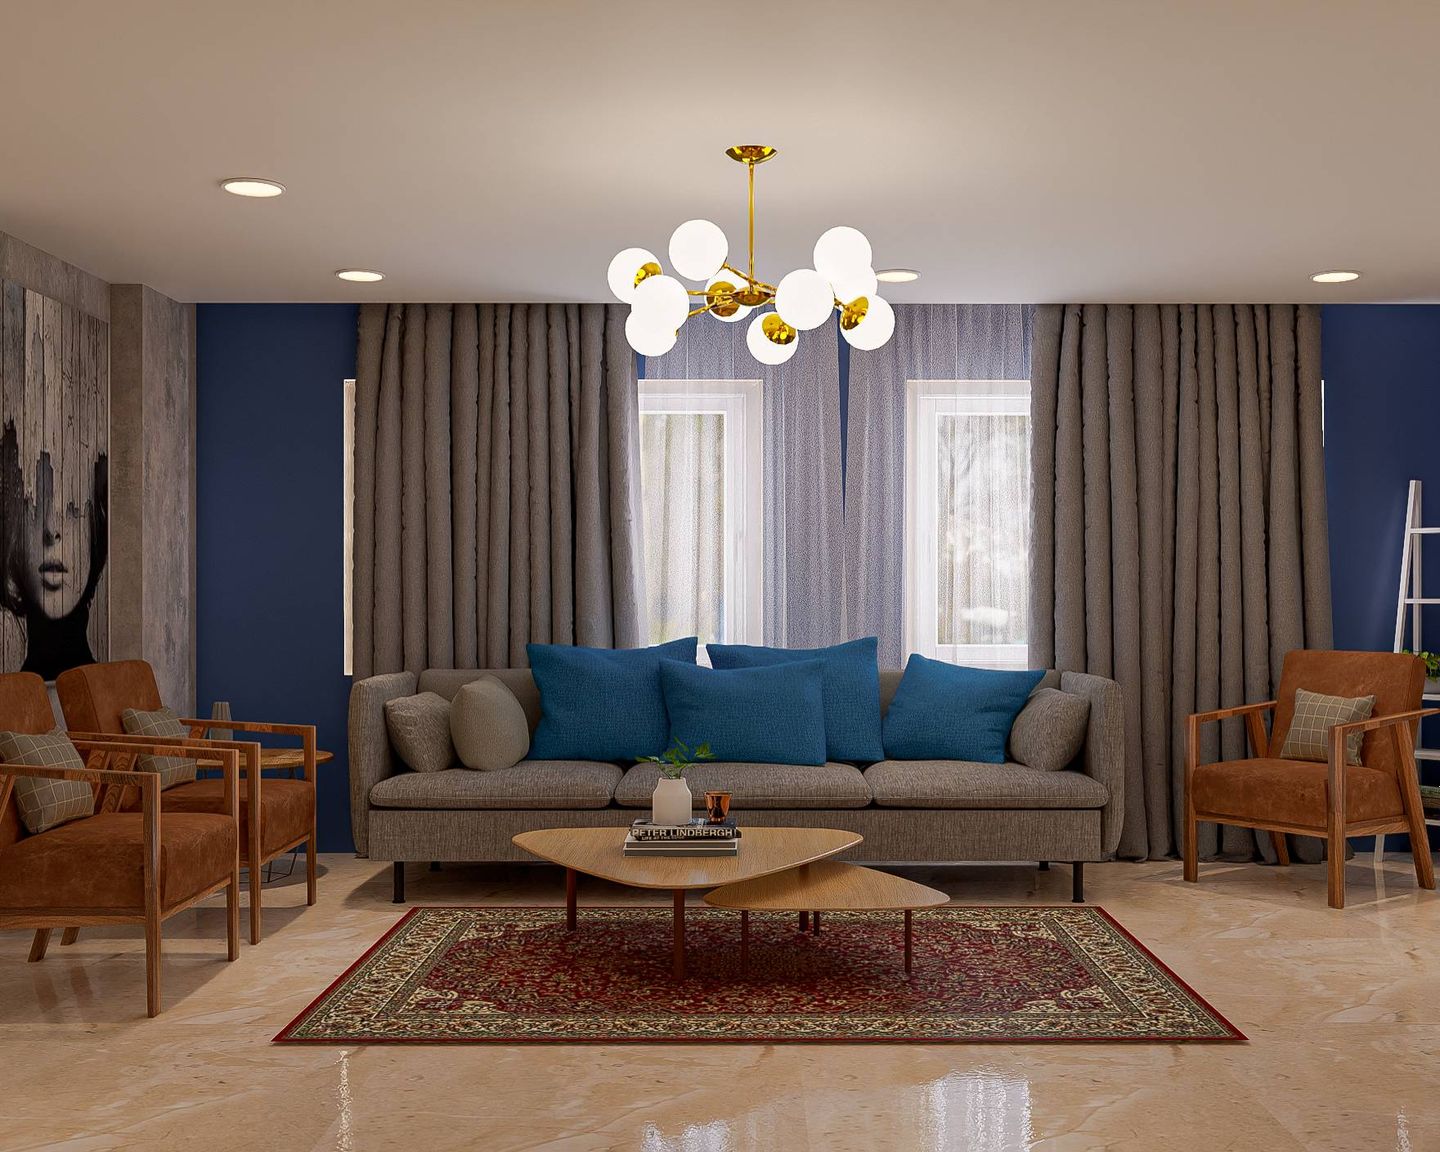 Modern Living Room Design With Chandelier